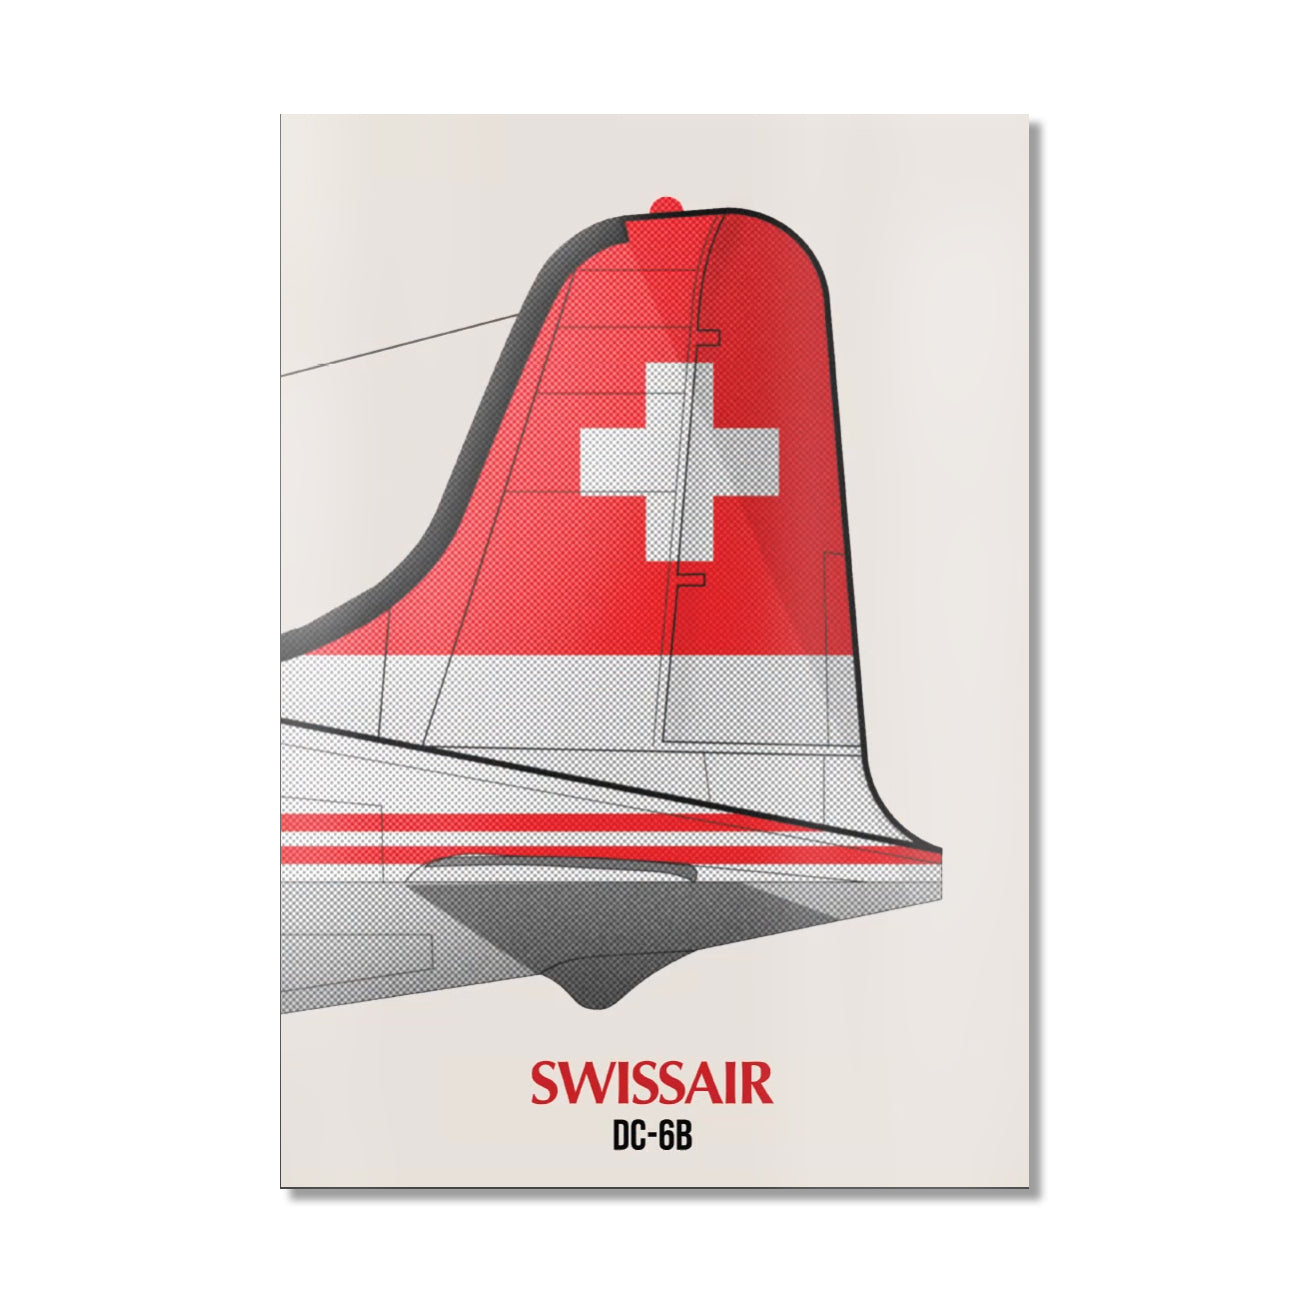 Swiss Air Tail DC-6B